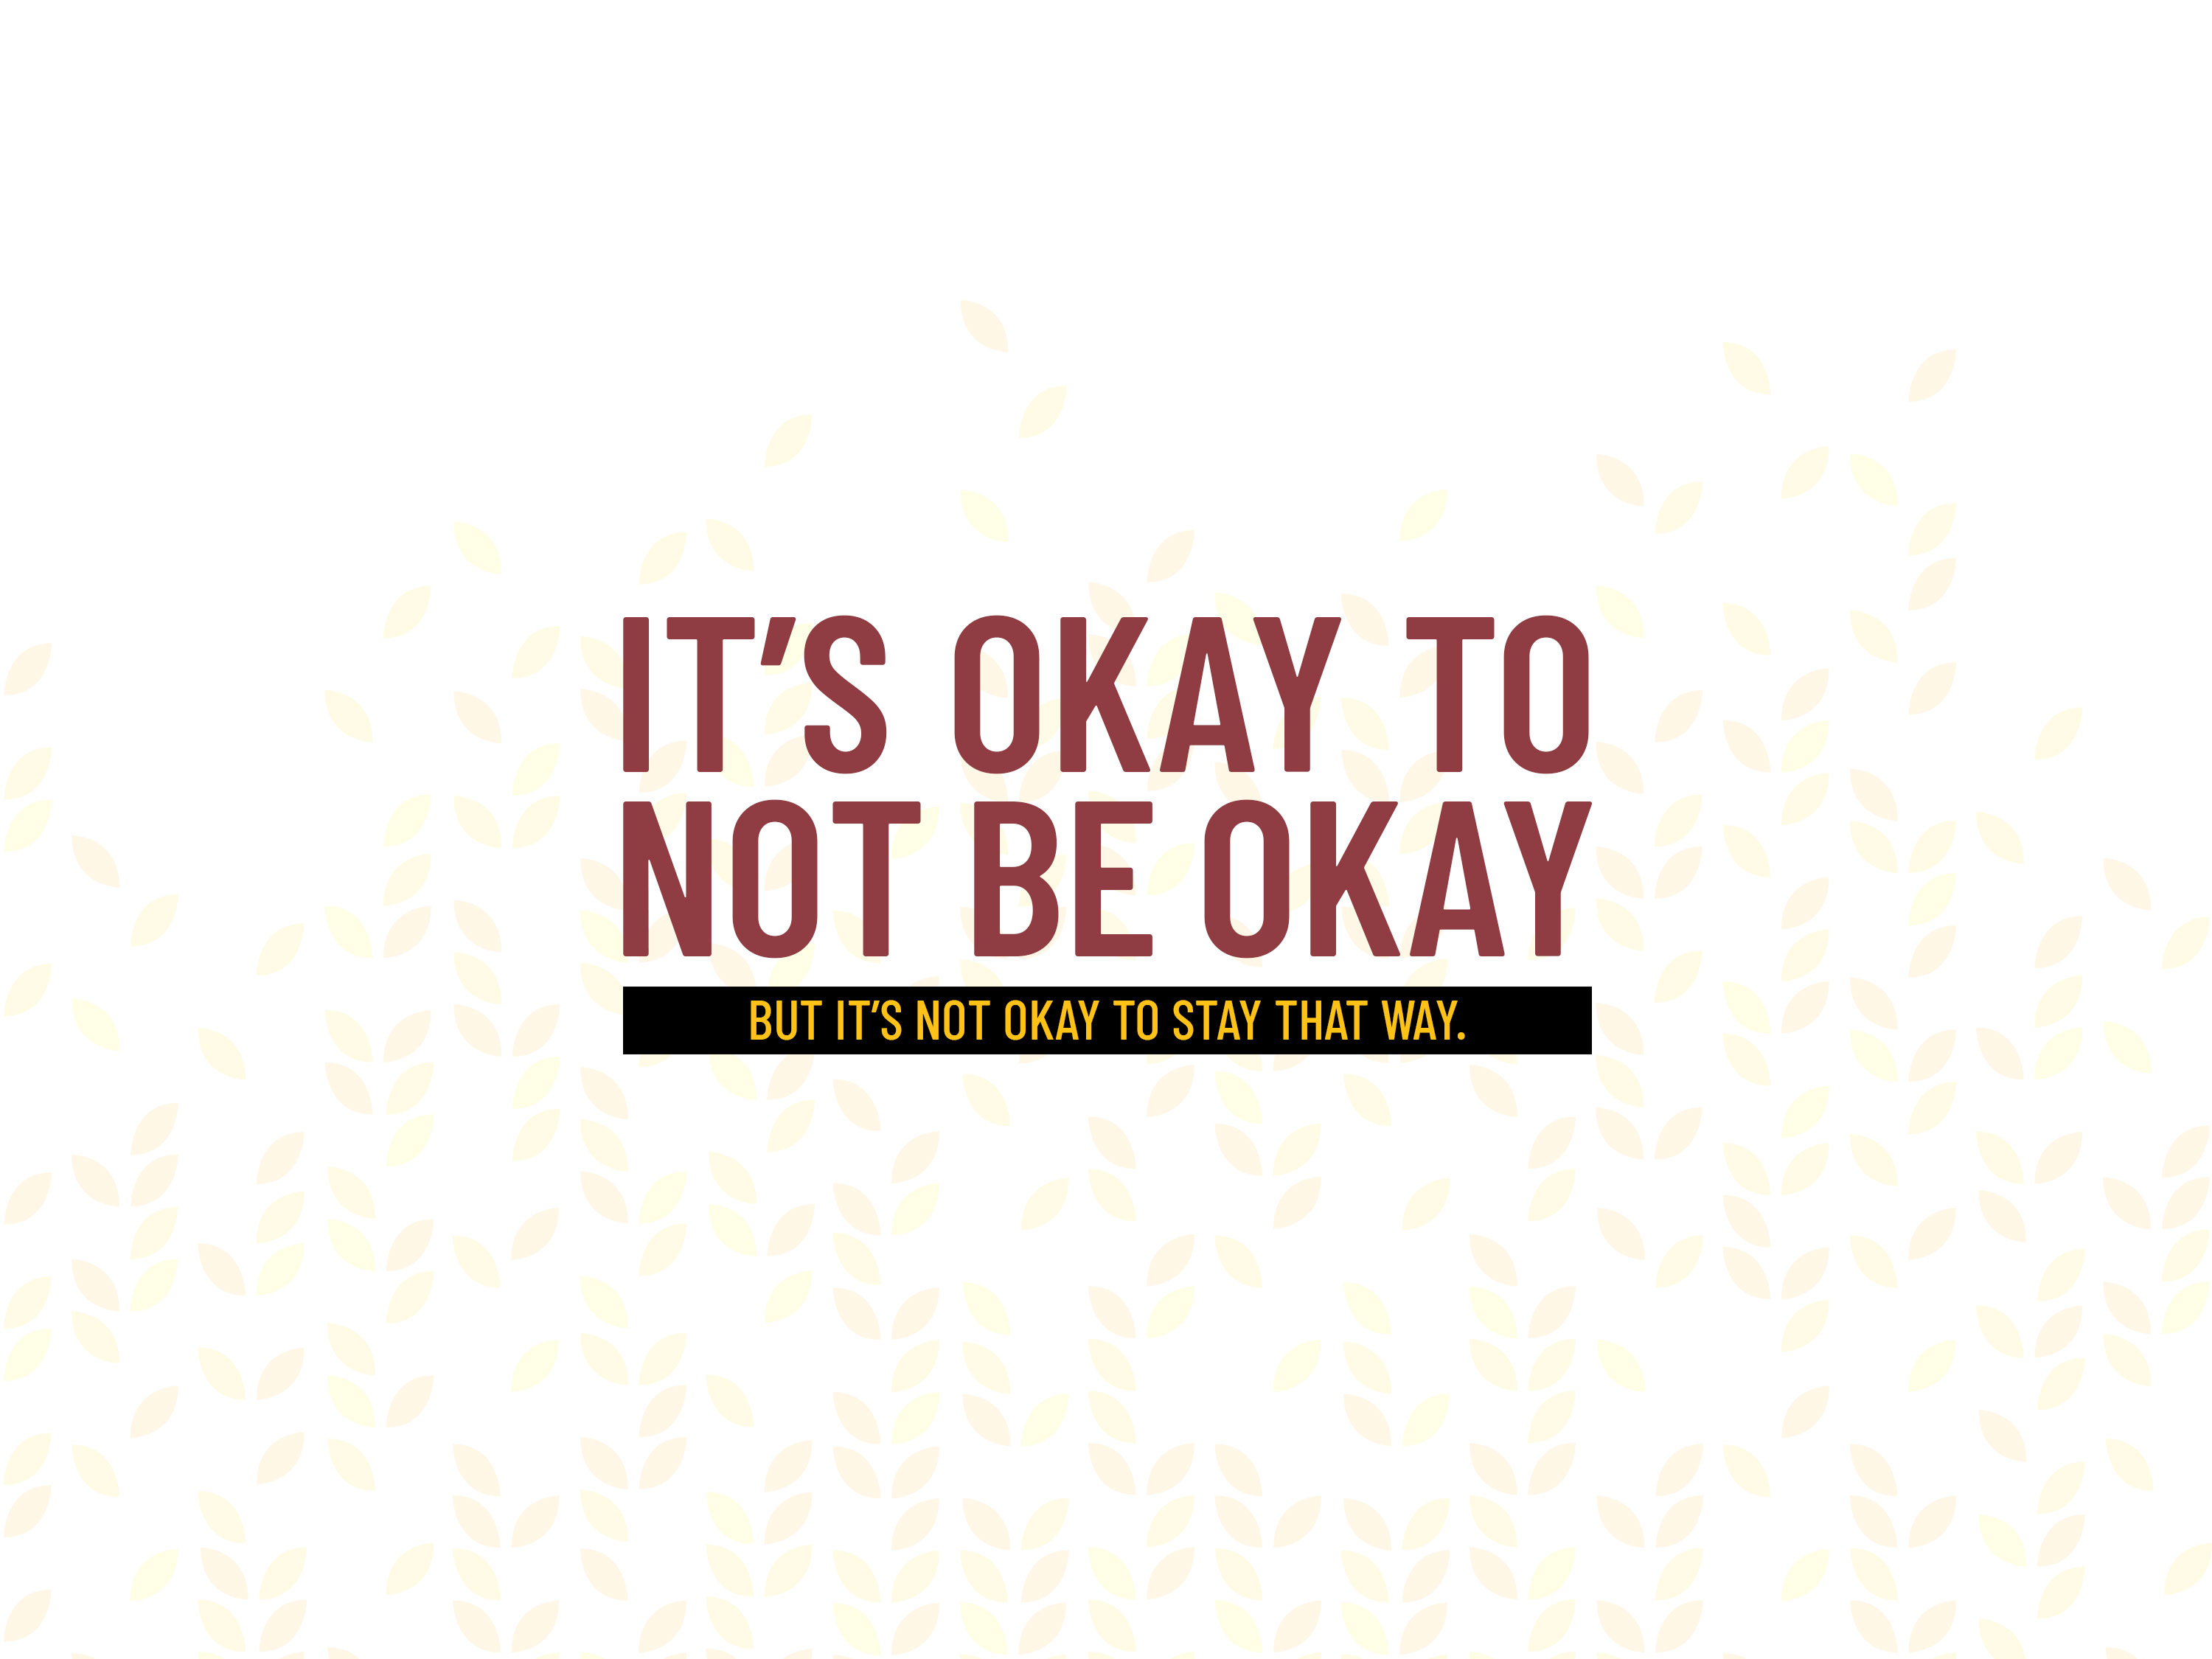 IT'S OKAY TO NOT BE OKAY, BUT IT'S NOT OKAY TO STAY THAT WAY.